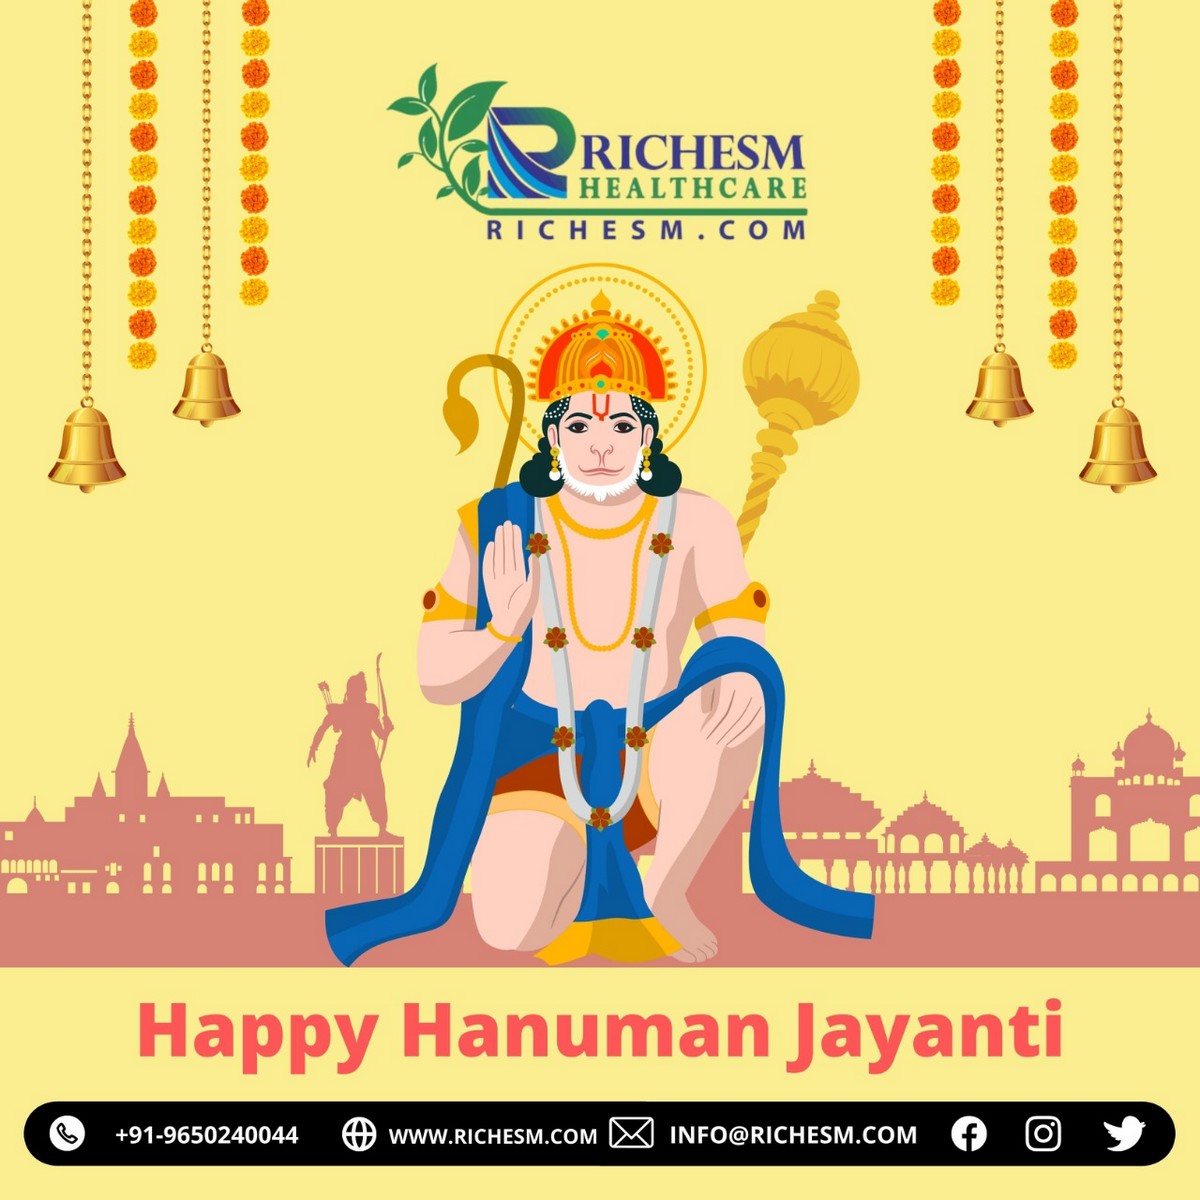 Wishing You All A Happy Hanuman Jayanti Others Wishing You All A Happy Hanuman Jayanti 2